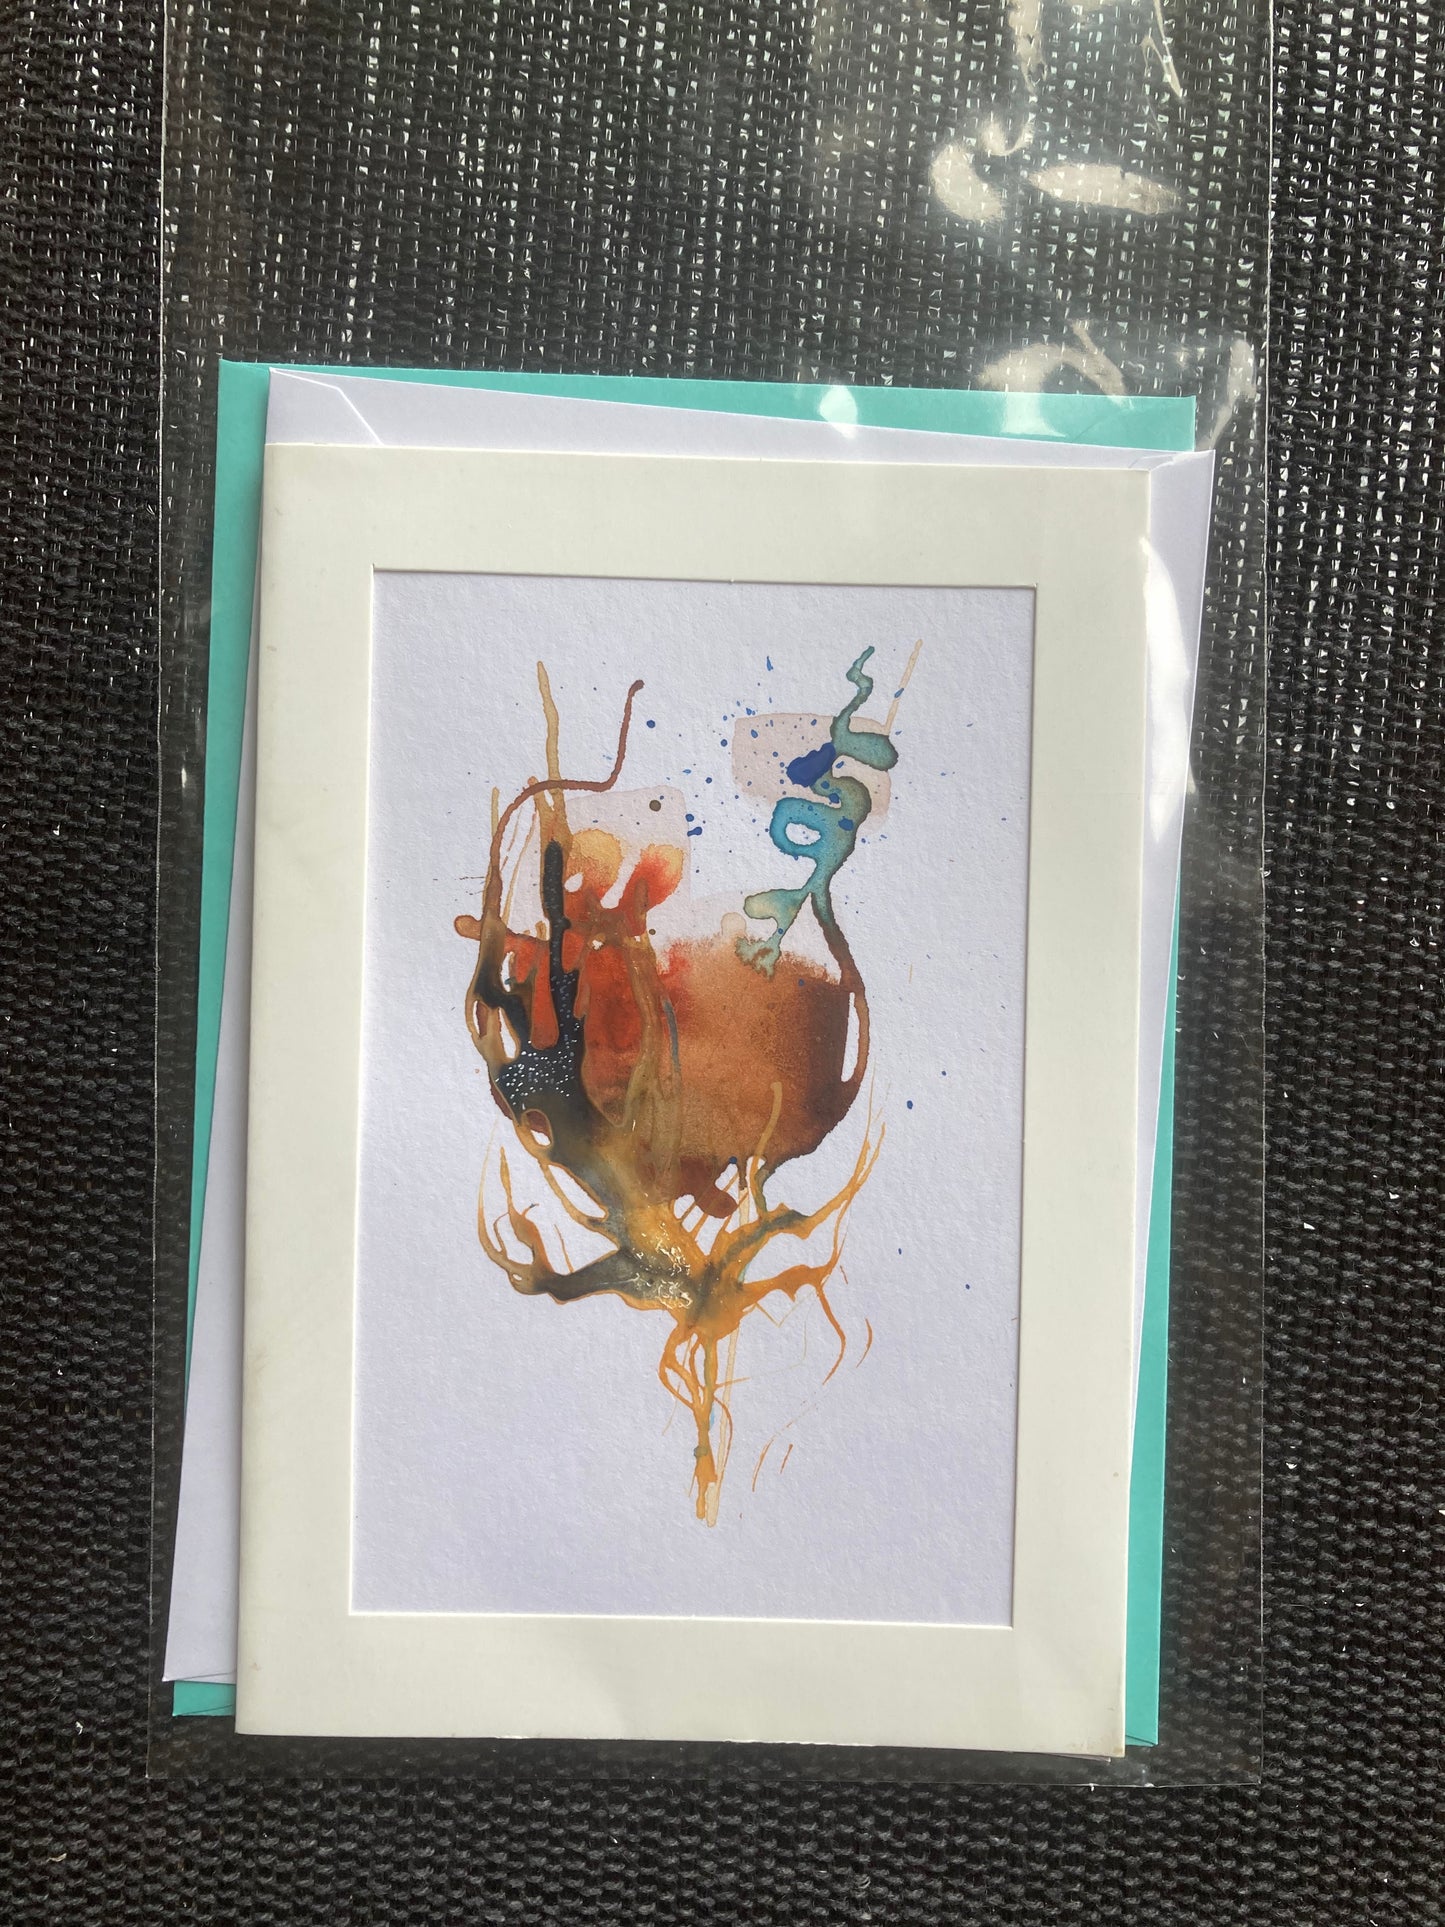 Baby Bloom C107 Greeting Card with Original Art Work